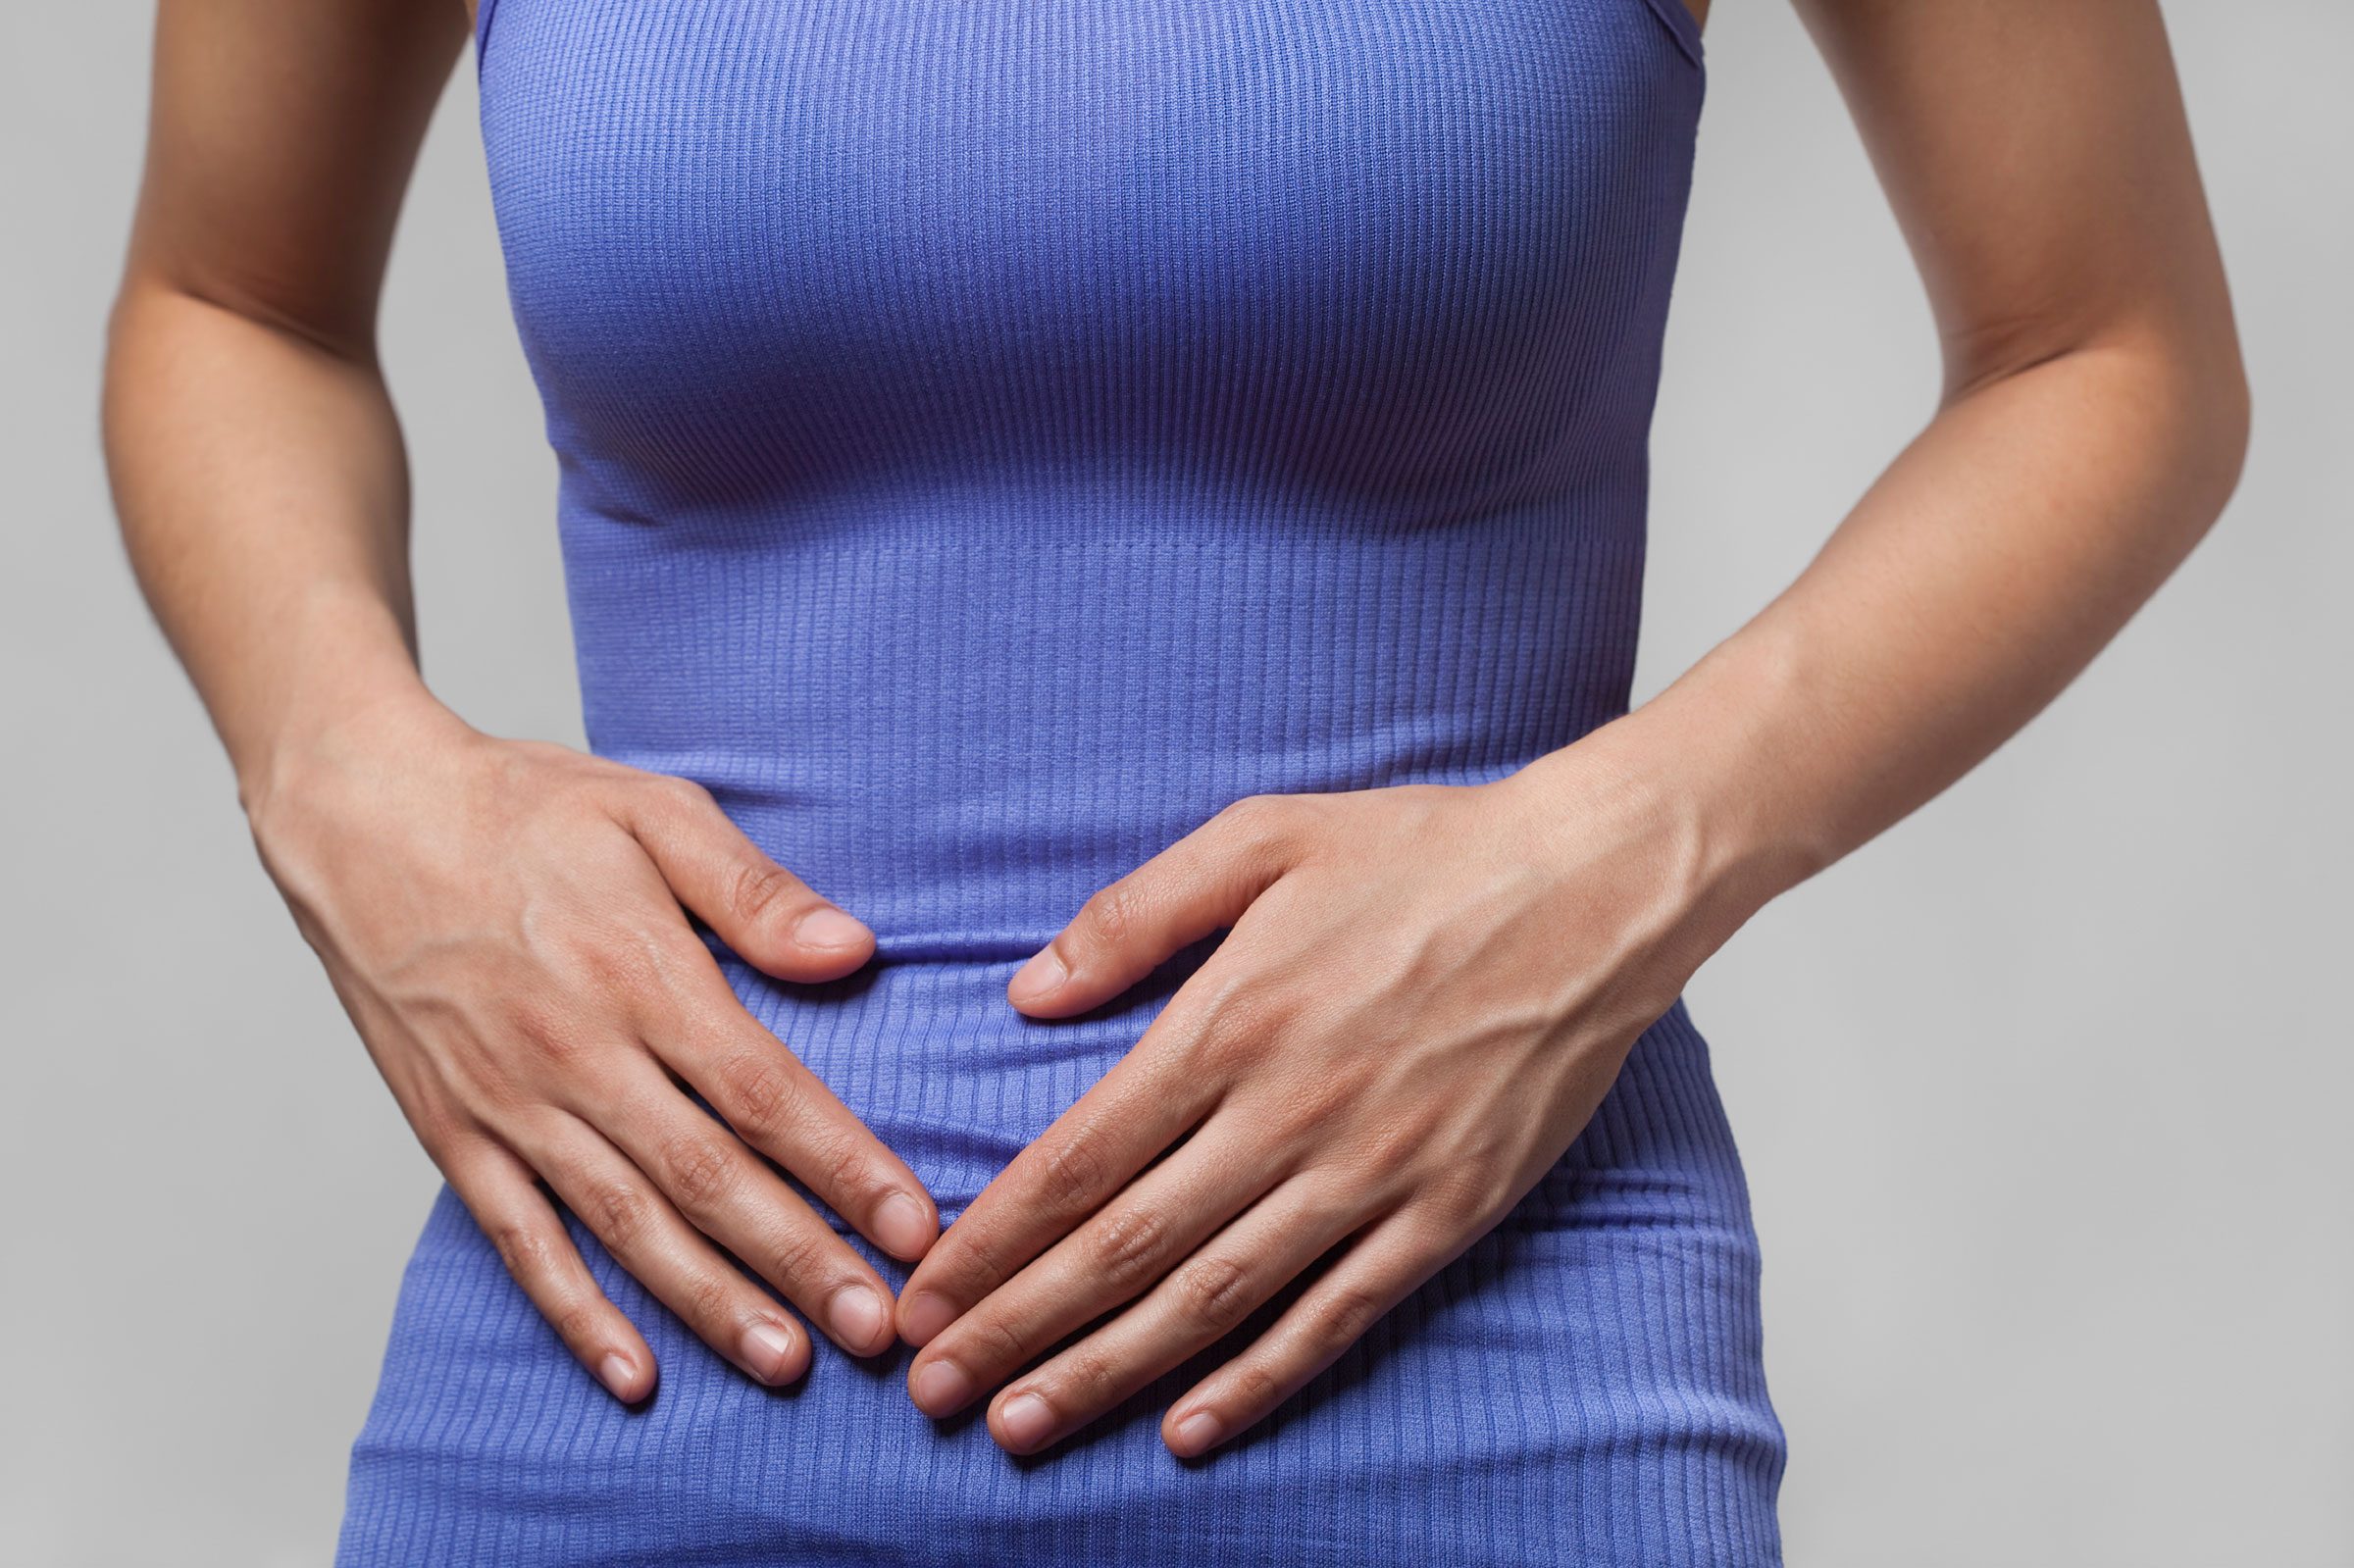 menstrual cramp relief: unusual period pain remedies | reader's digest